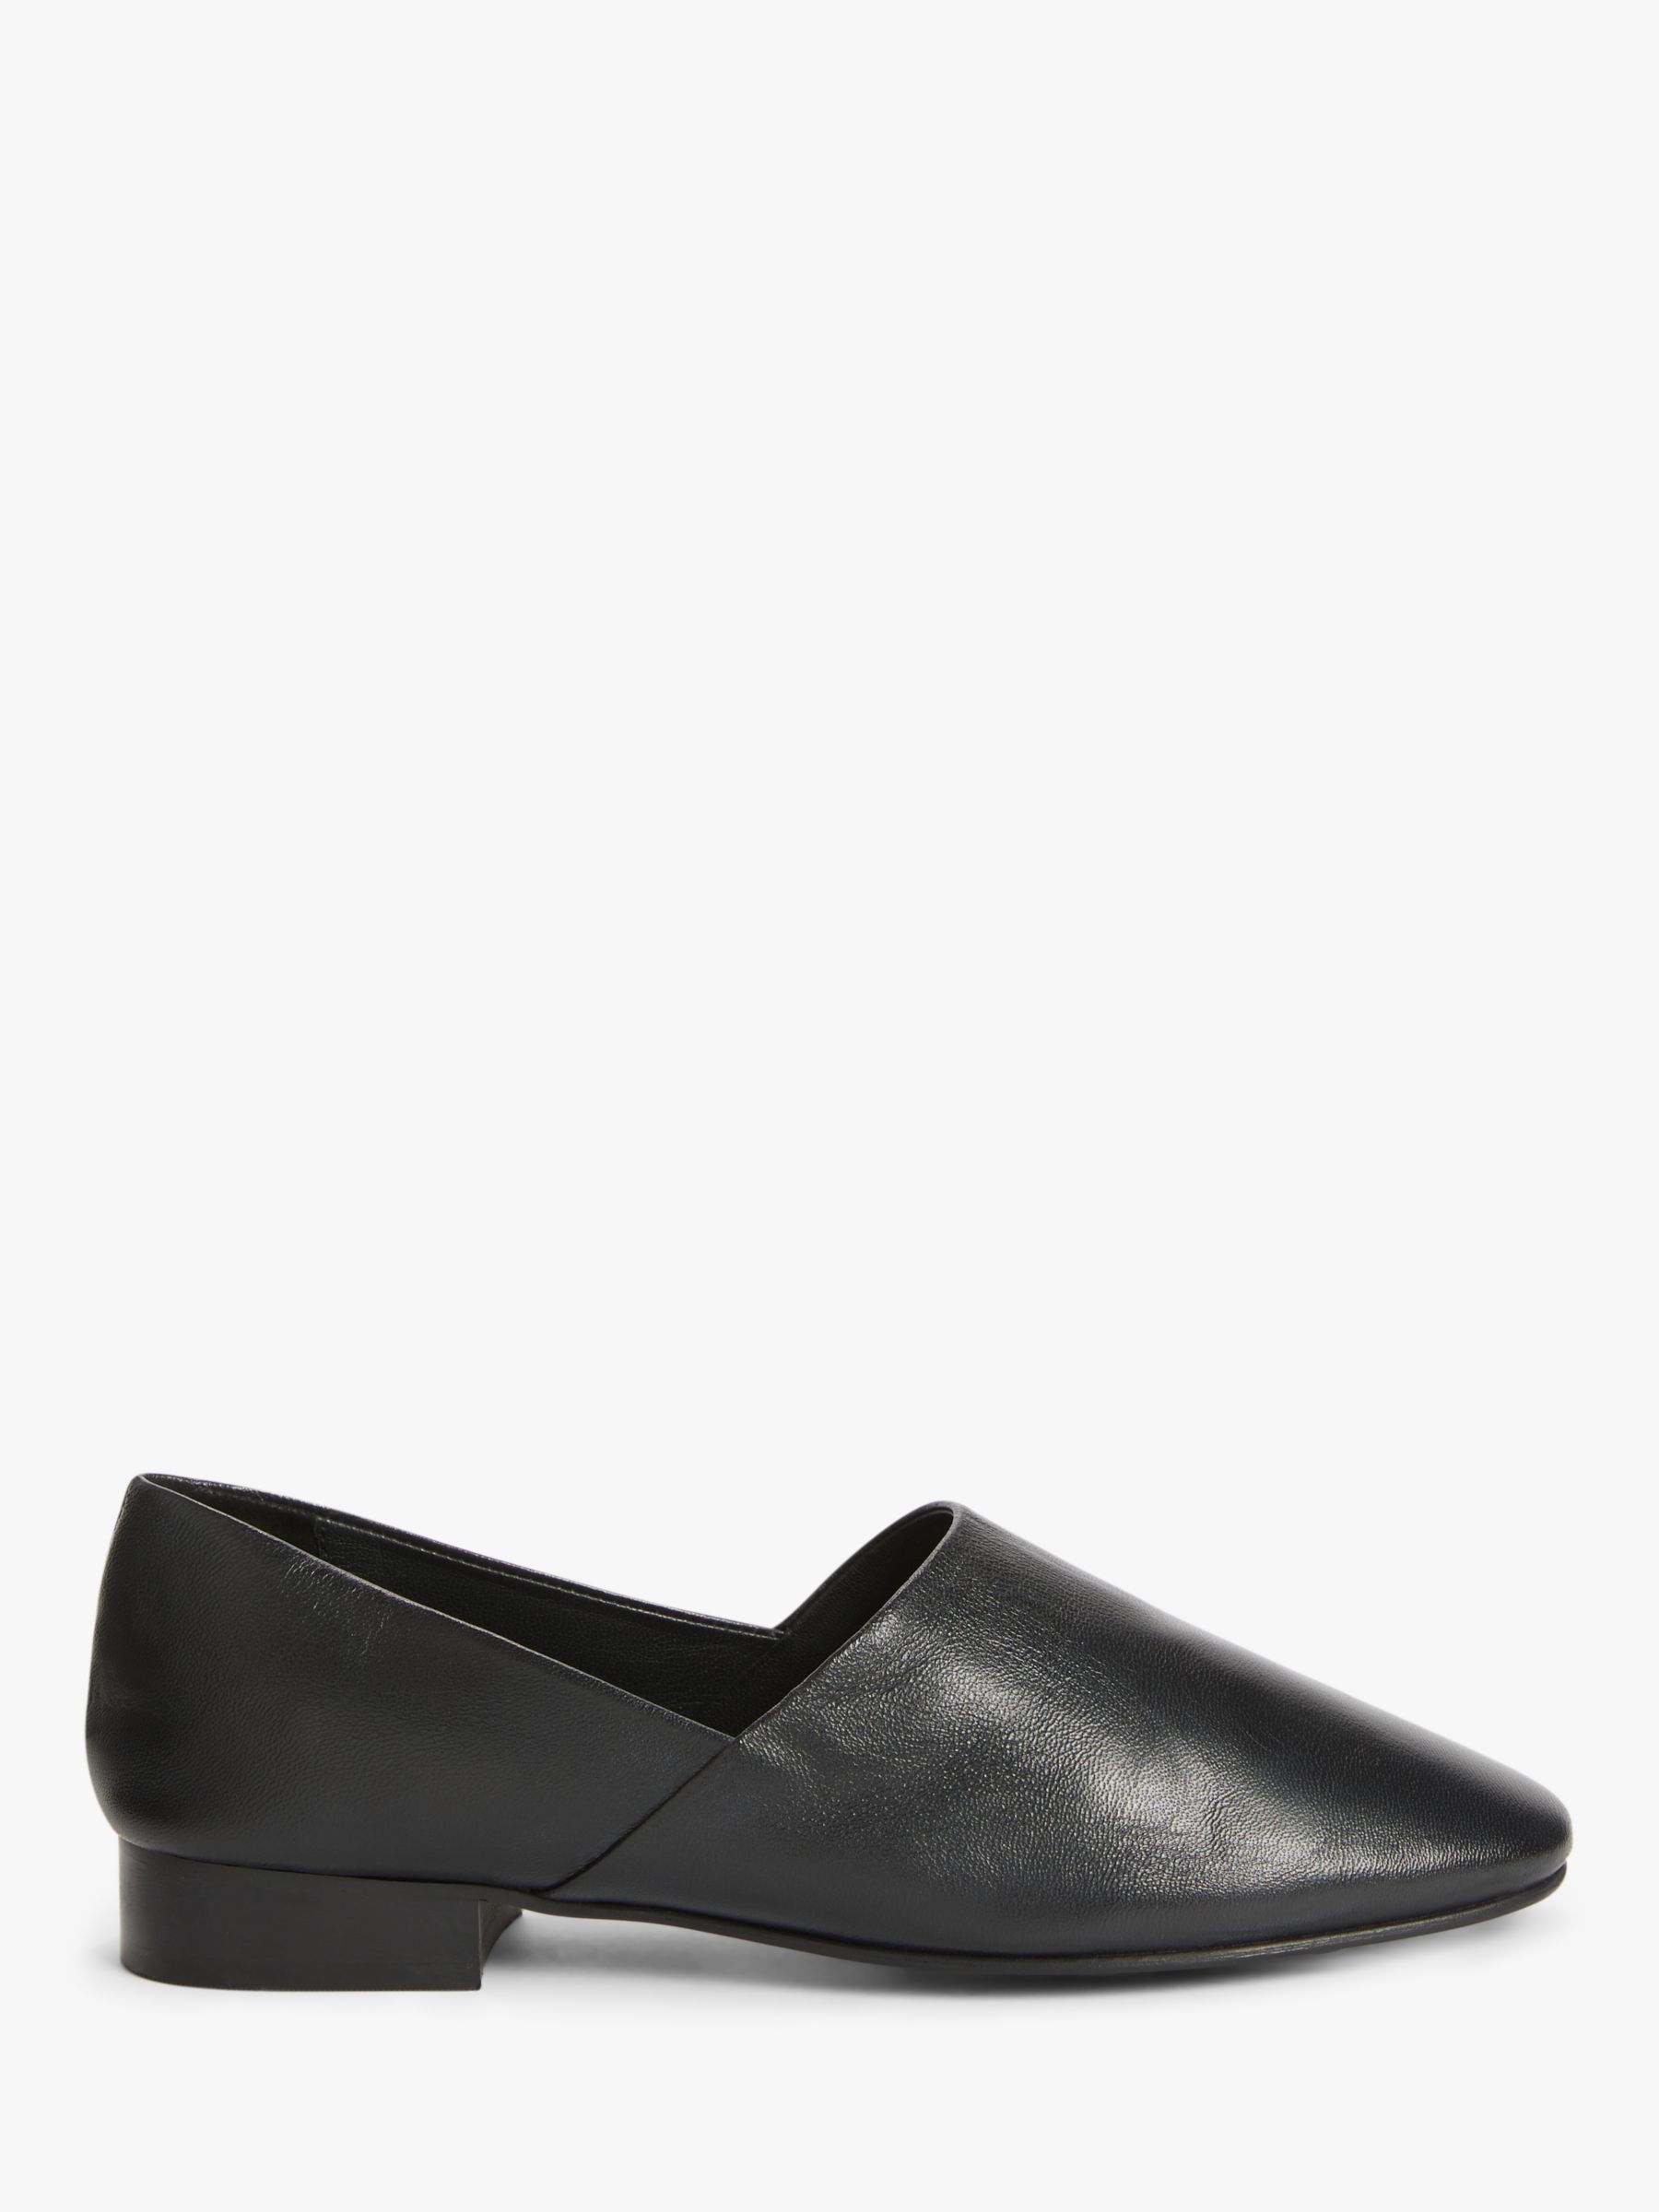 Kin Grayson Slip-On Flat Leather Court Shoes, Black